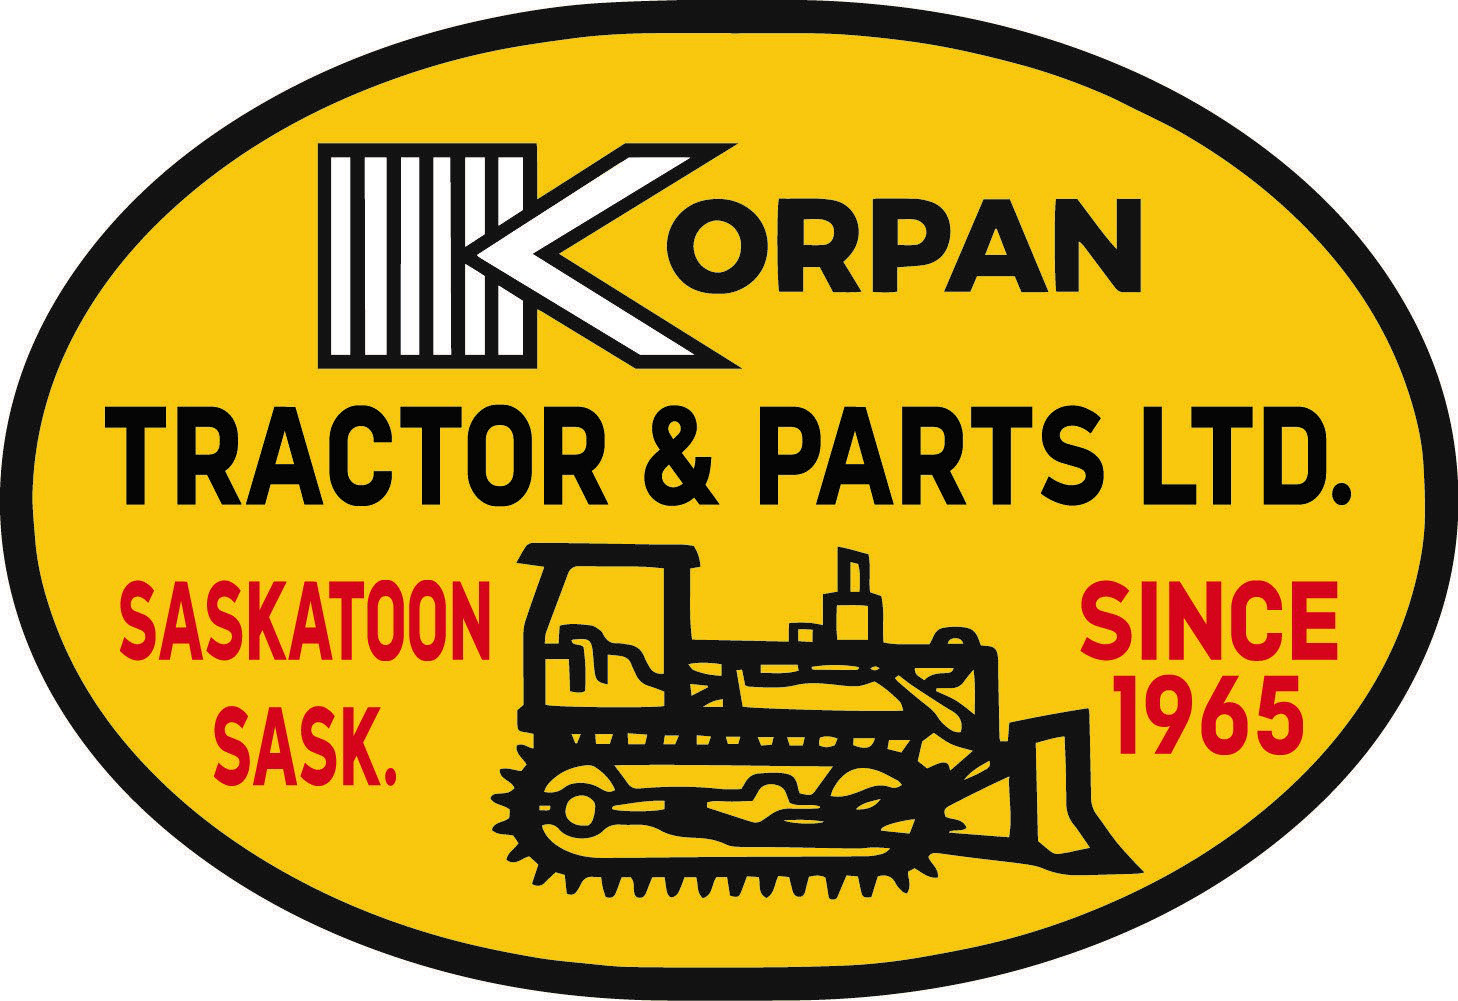 Korpan Tractor Parts Ltd.